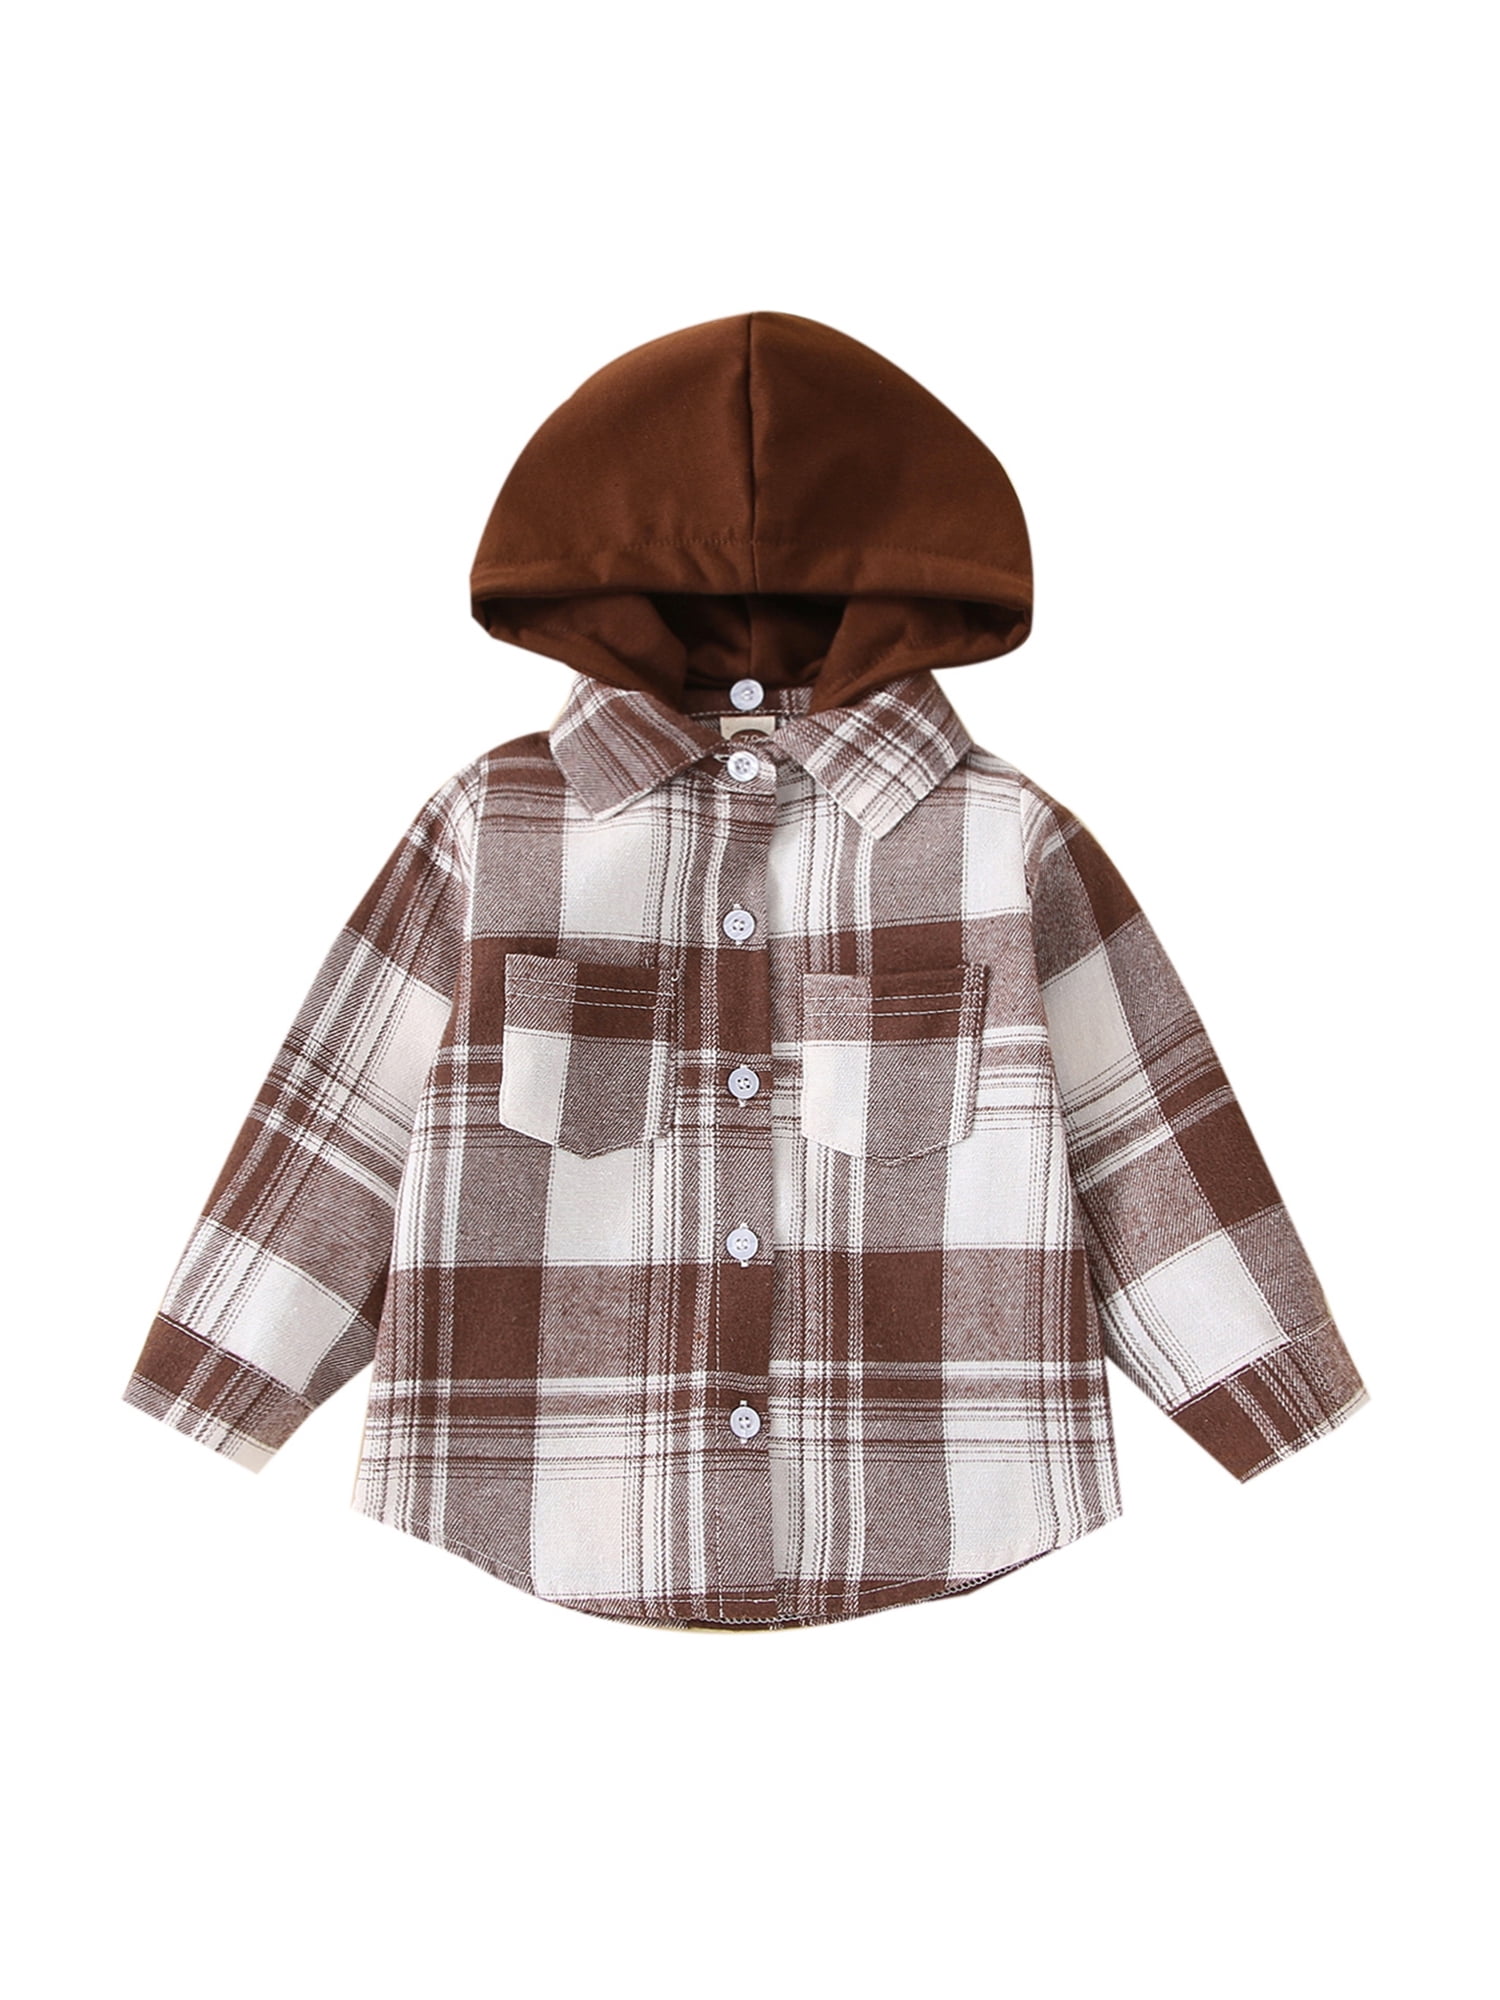 Toddler Baby Boy Girl Flannel Plaid Shirt Jacket Long Sleeve Shacket ...